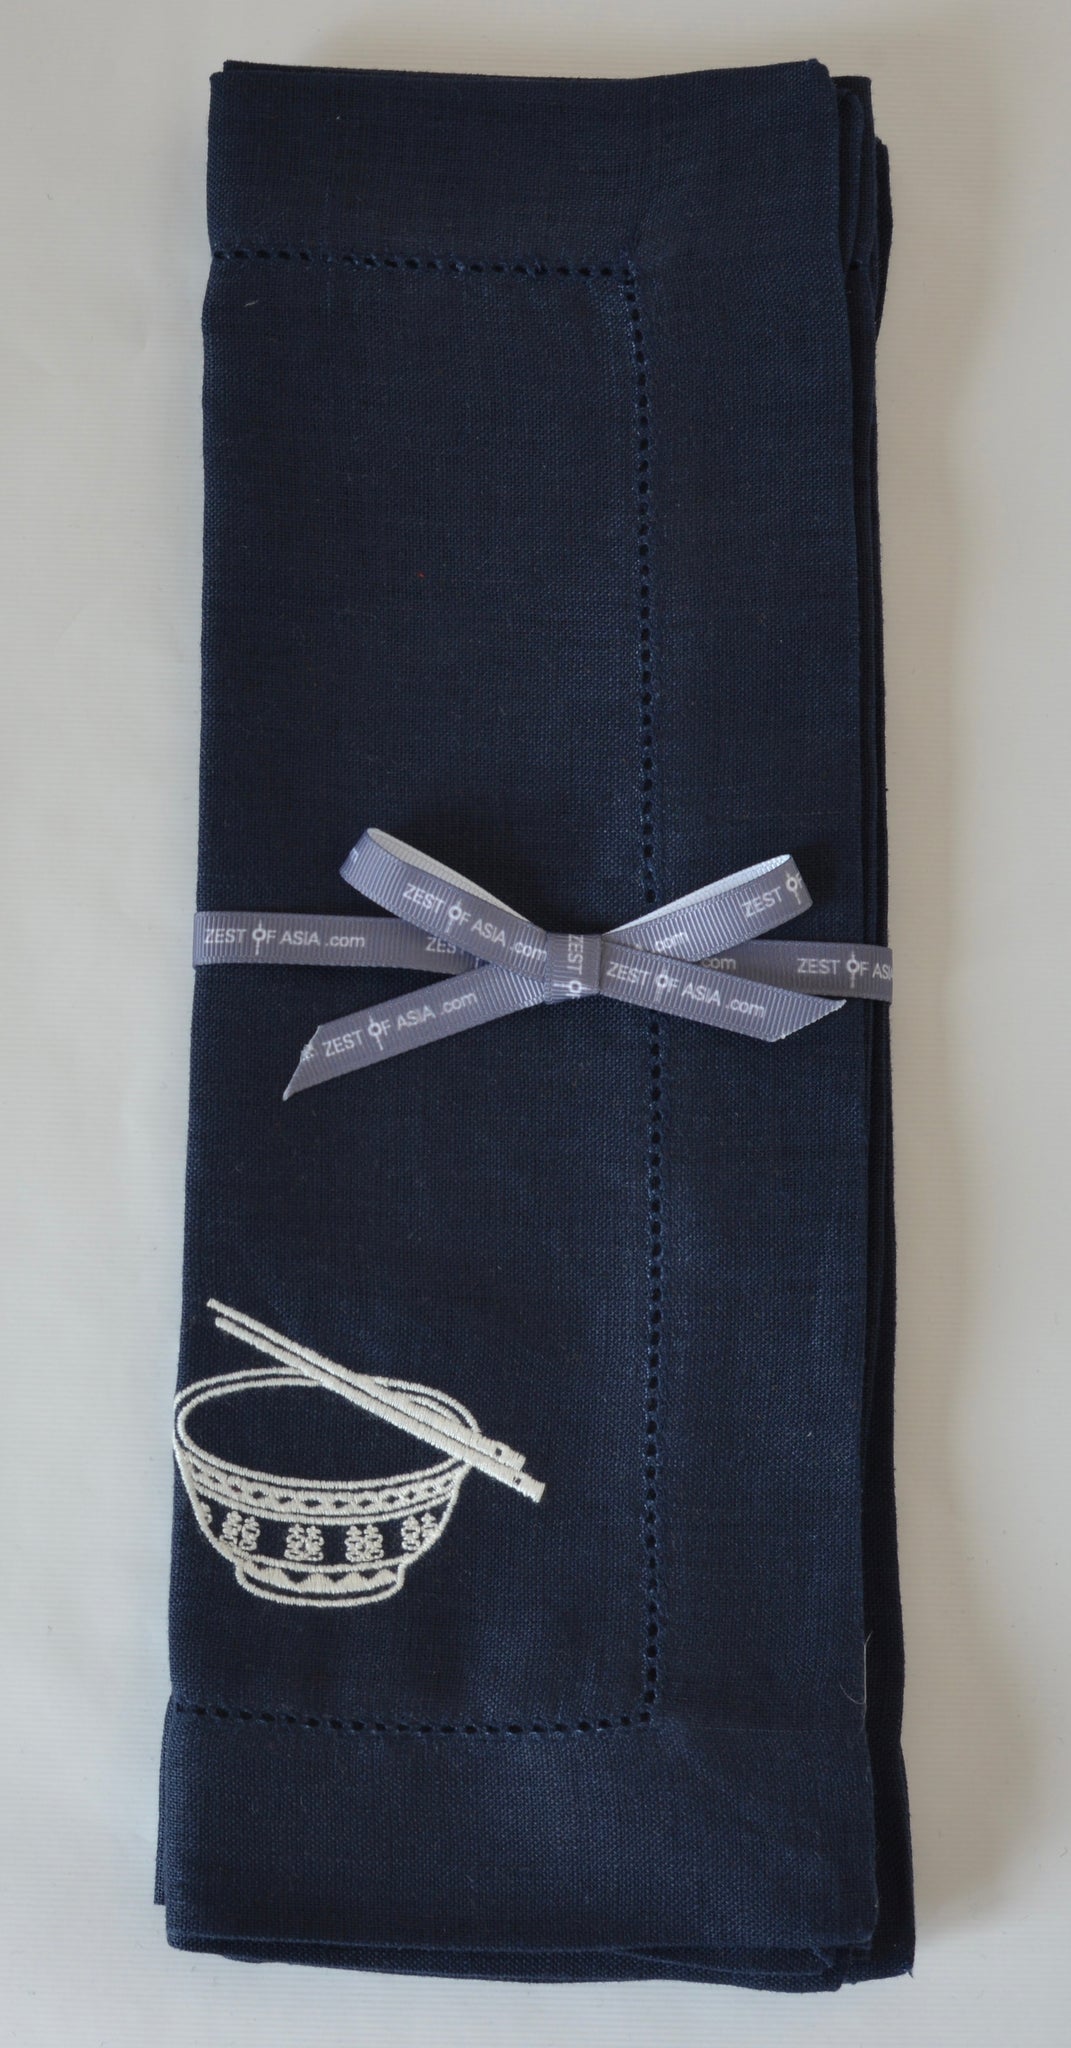 Navy Blue Linen Placemats - Set of 4 pieces